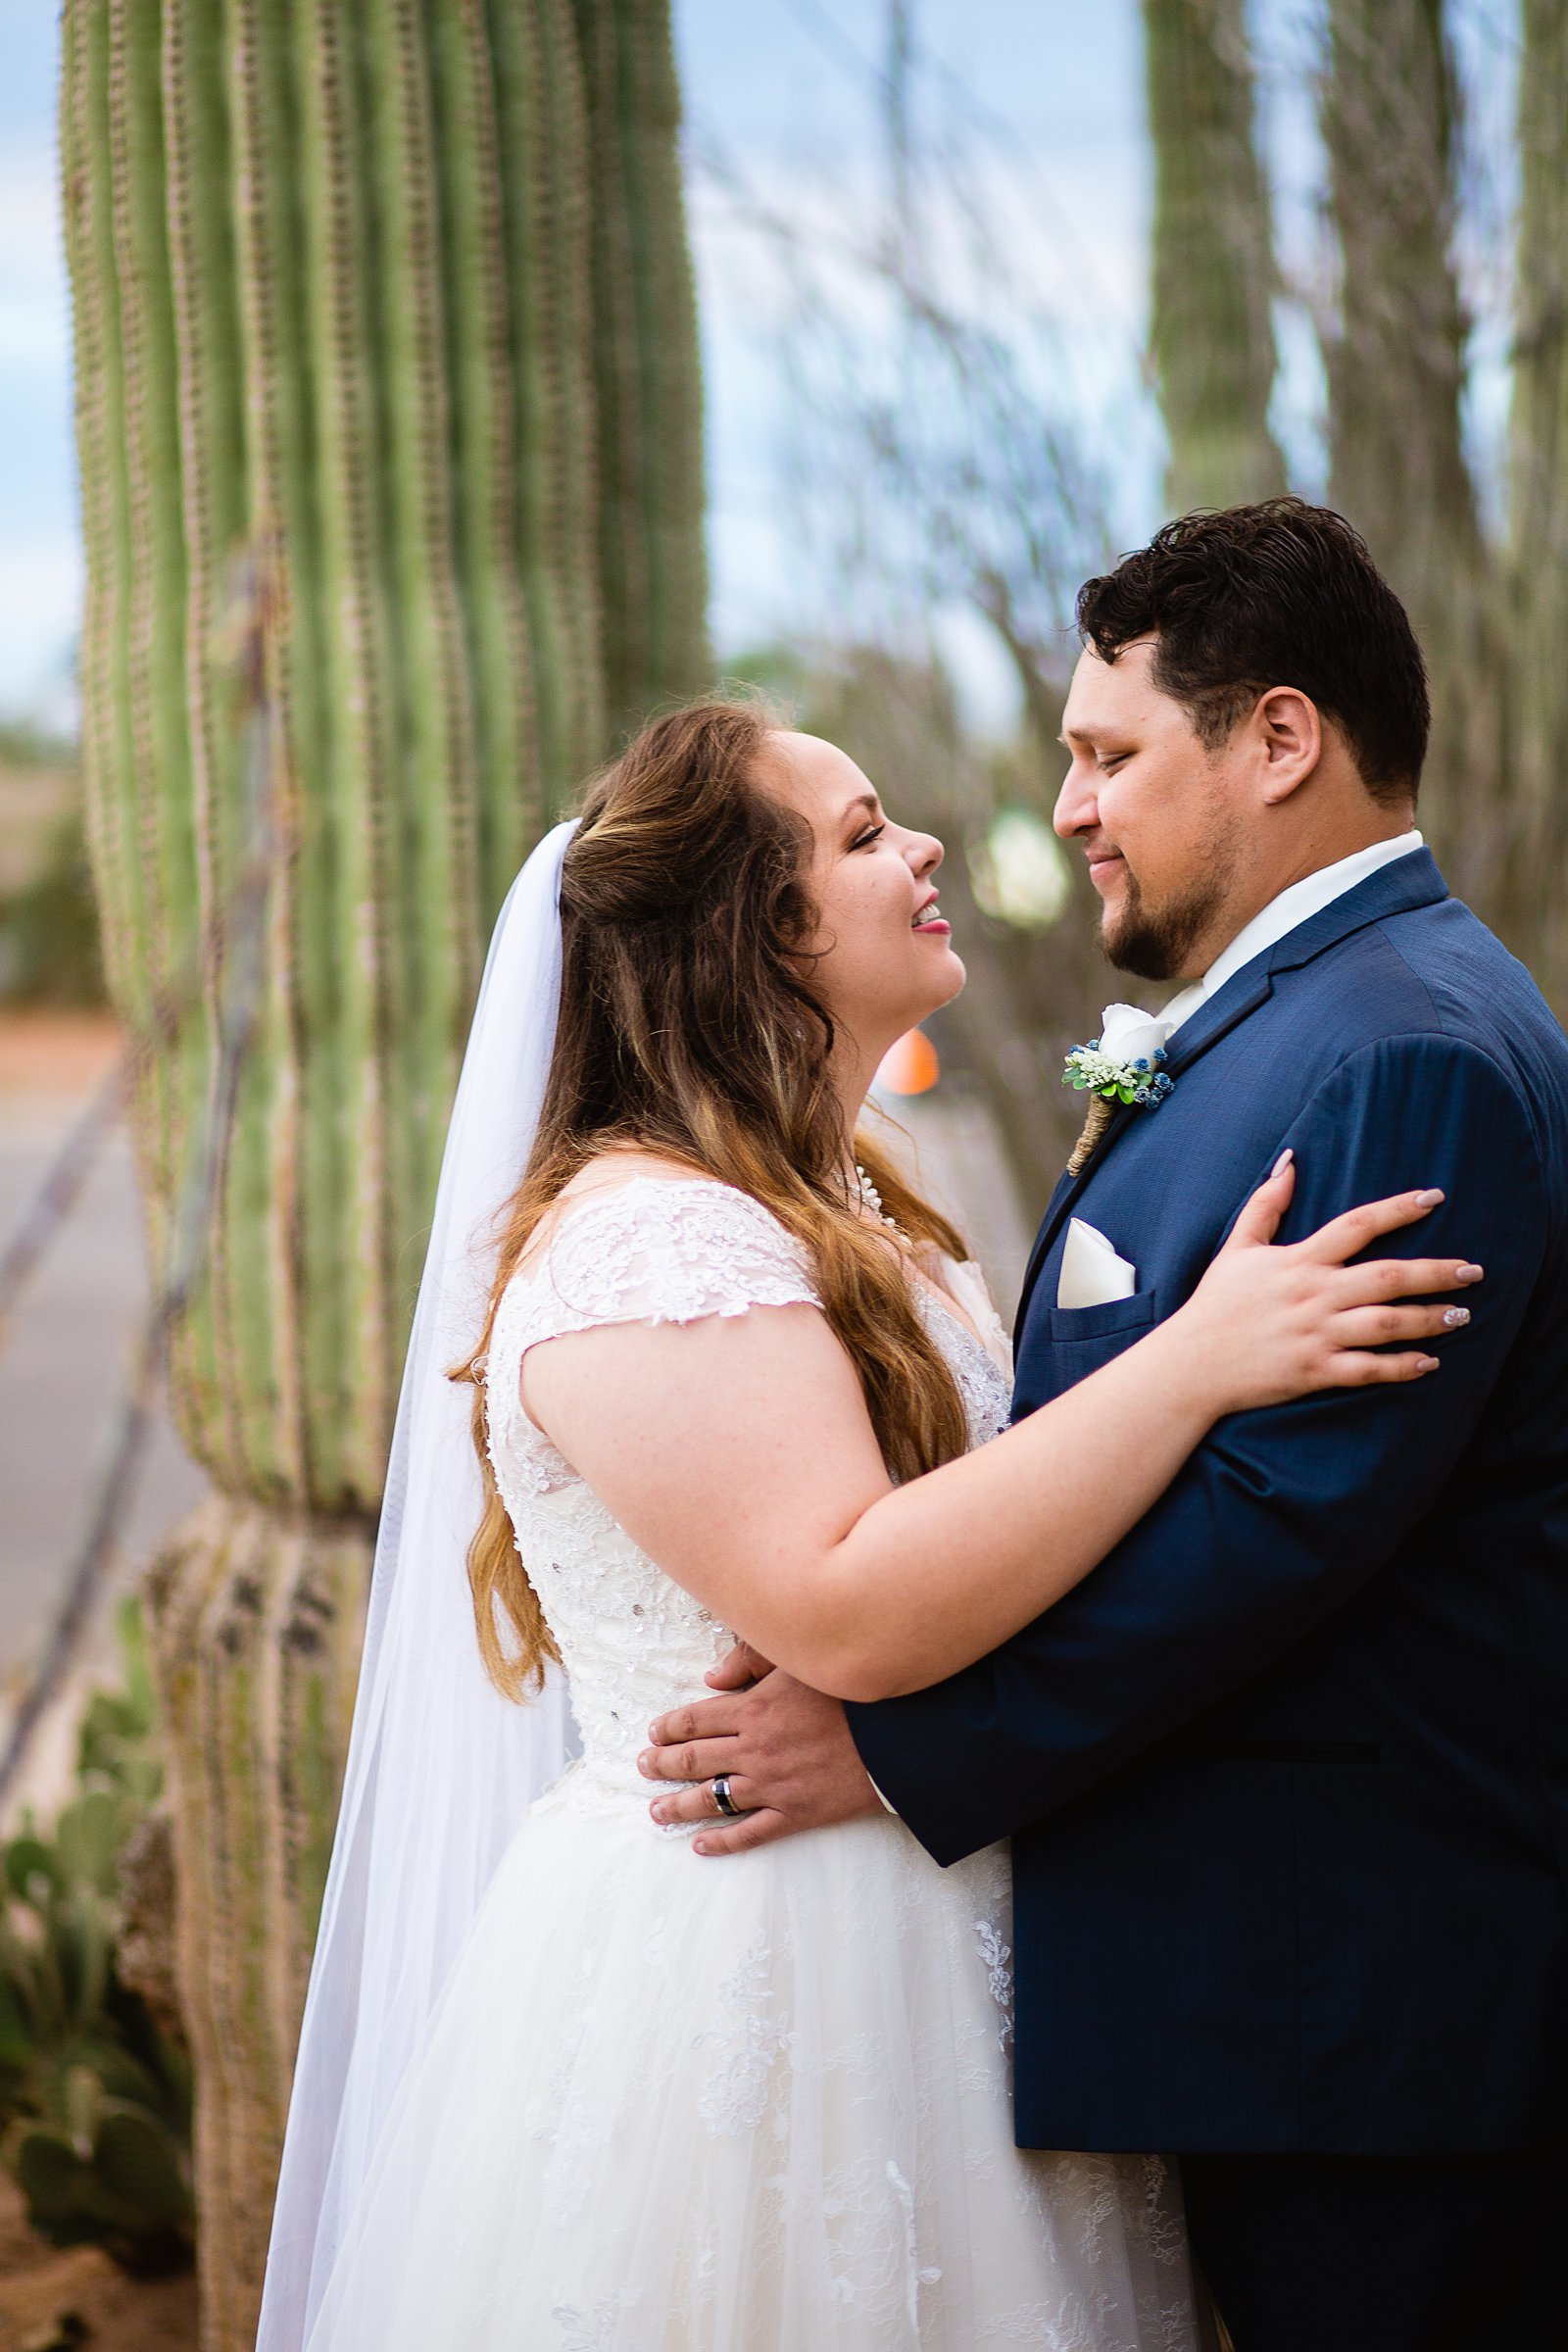 Bride and Groom share an intimate moment at their Backyard wedding by Arizona wedding photographer PMA Photography.